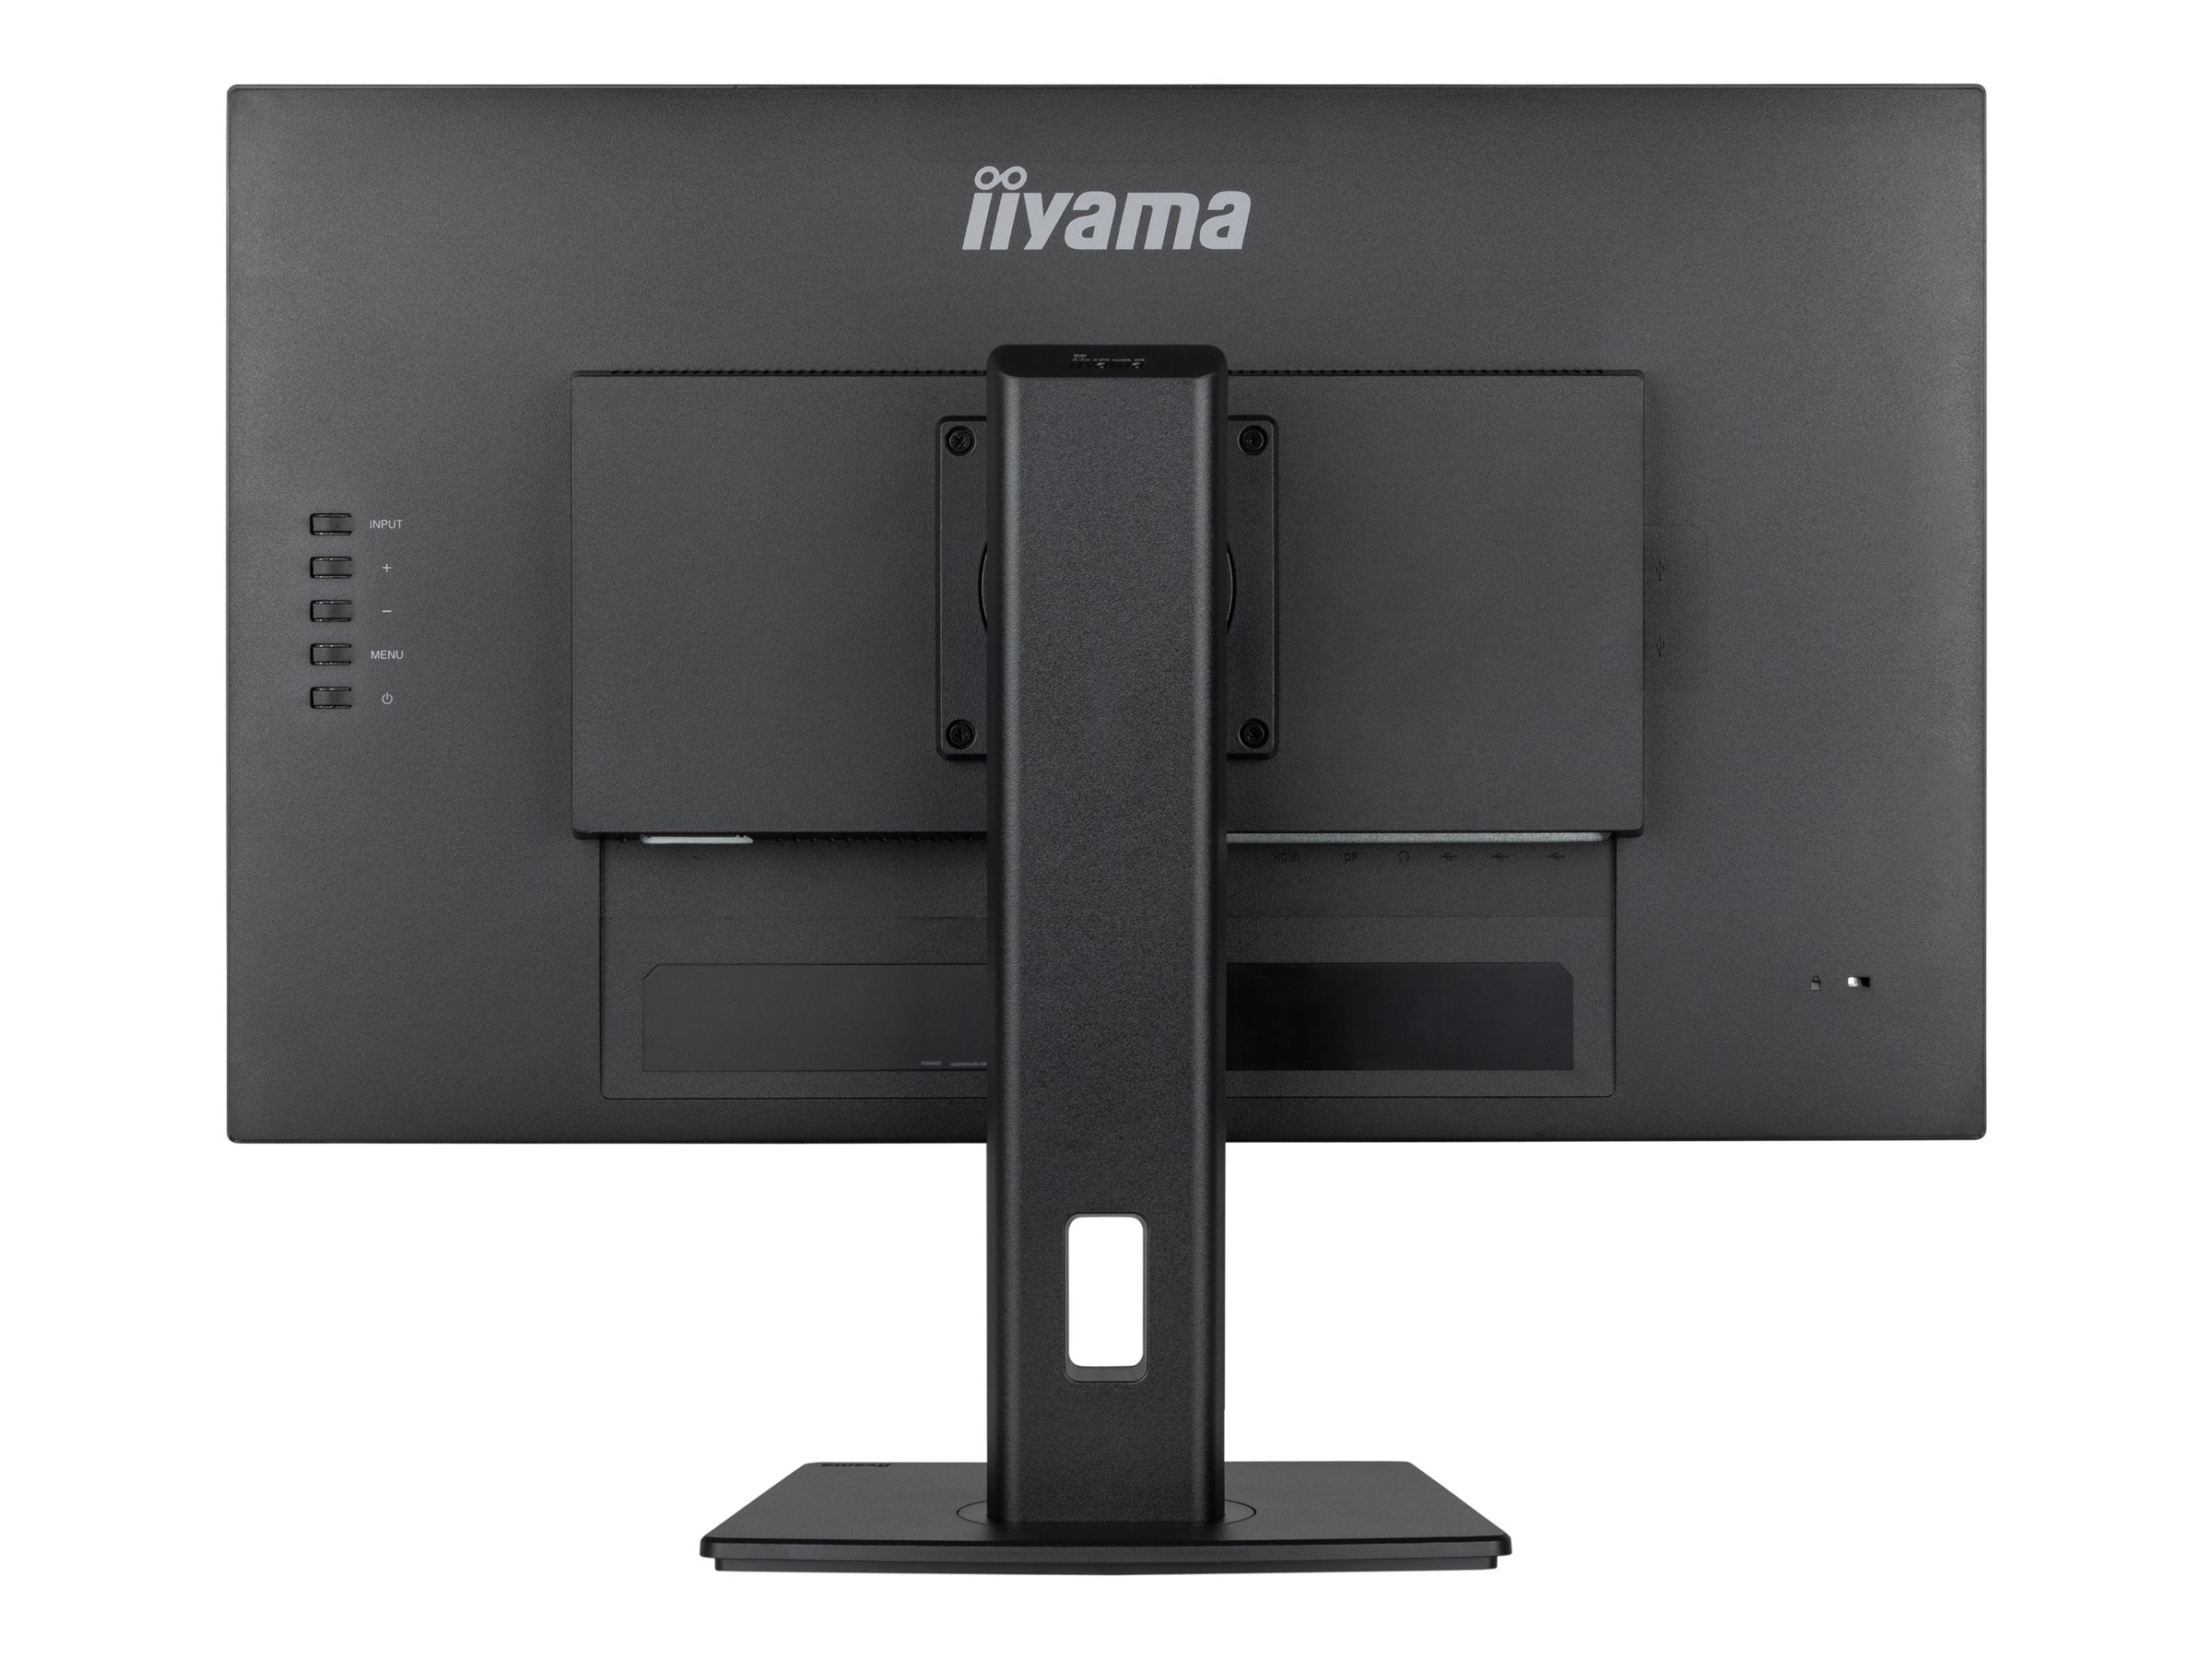 iiyama ProLite XUB2792QSU-B6 - Écran LED - 27" - 2560 x 1440 WQHD @ 100 Hz - IPS - 250 cd/m² - 1300:1 - 0.4 ms - HDMI, DisplayPort - haut-parleurs - noir mat - XUB2792QSU-B6 - Écrans d'ordinateur